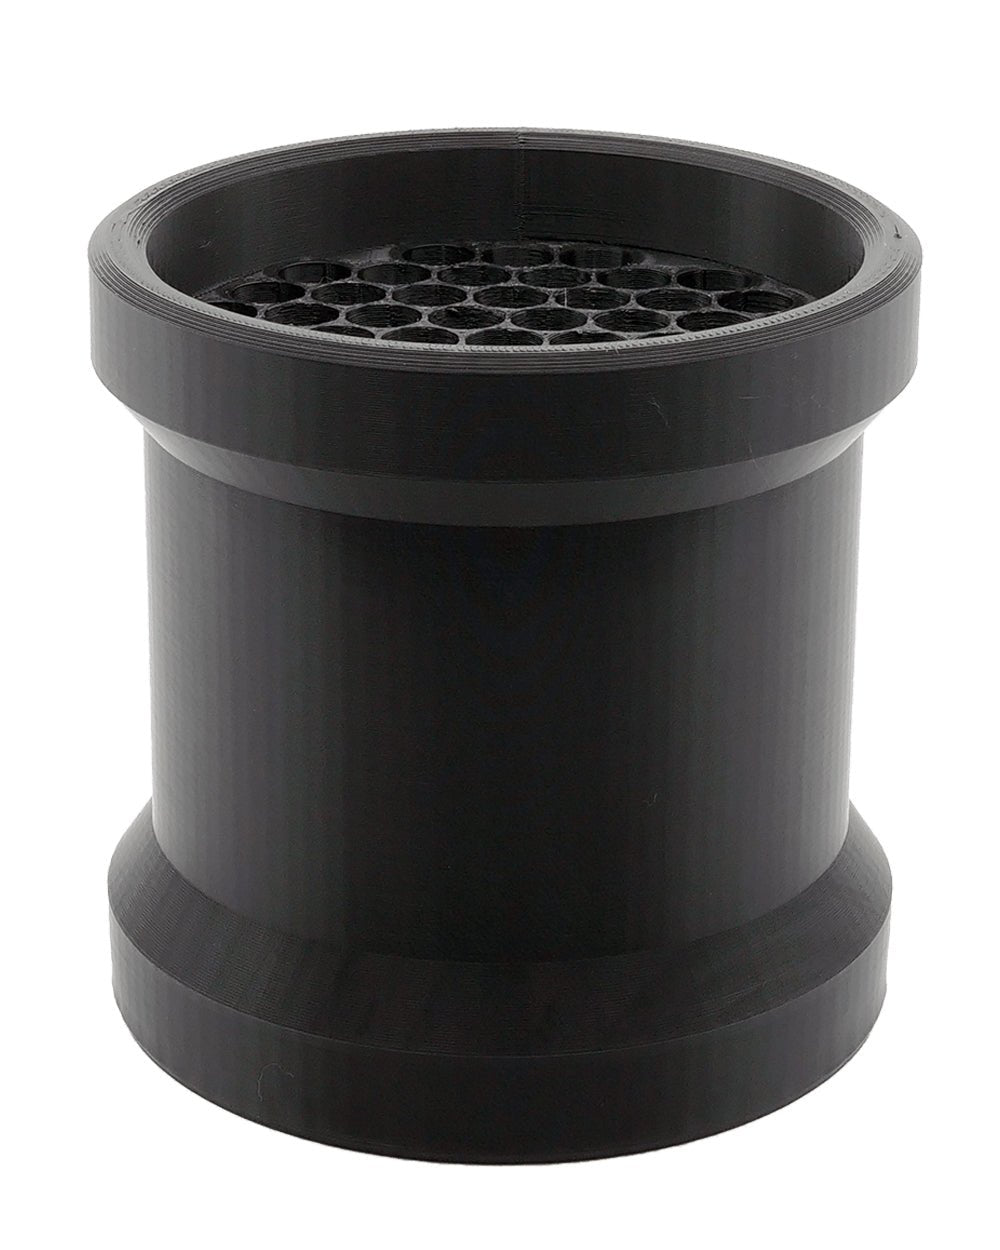 HUMBOLDT | Black Pre-Rolled Cones Filling Machine Starter Kit 109mm | Fill 55 Cones Per Run - 3